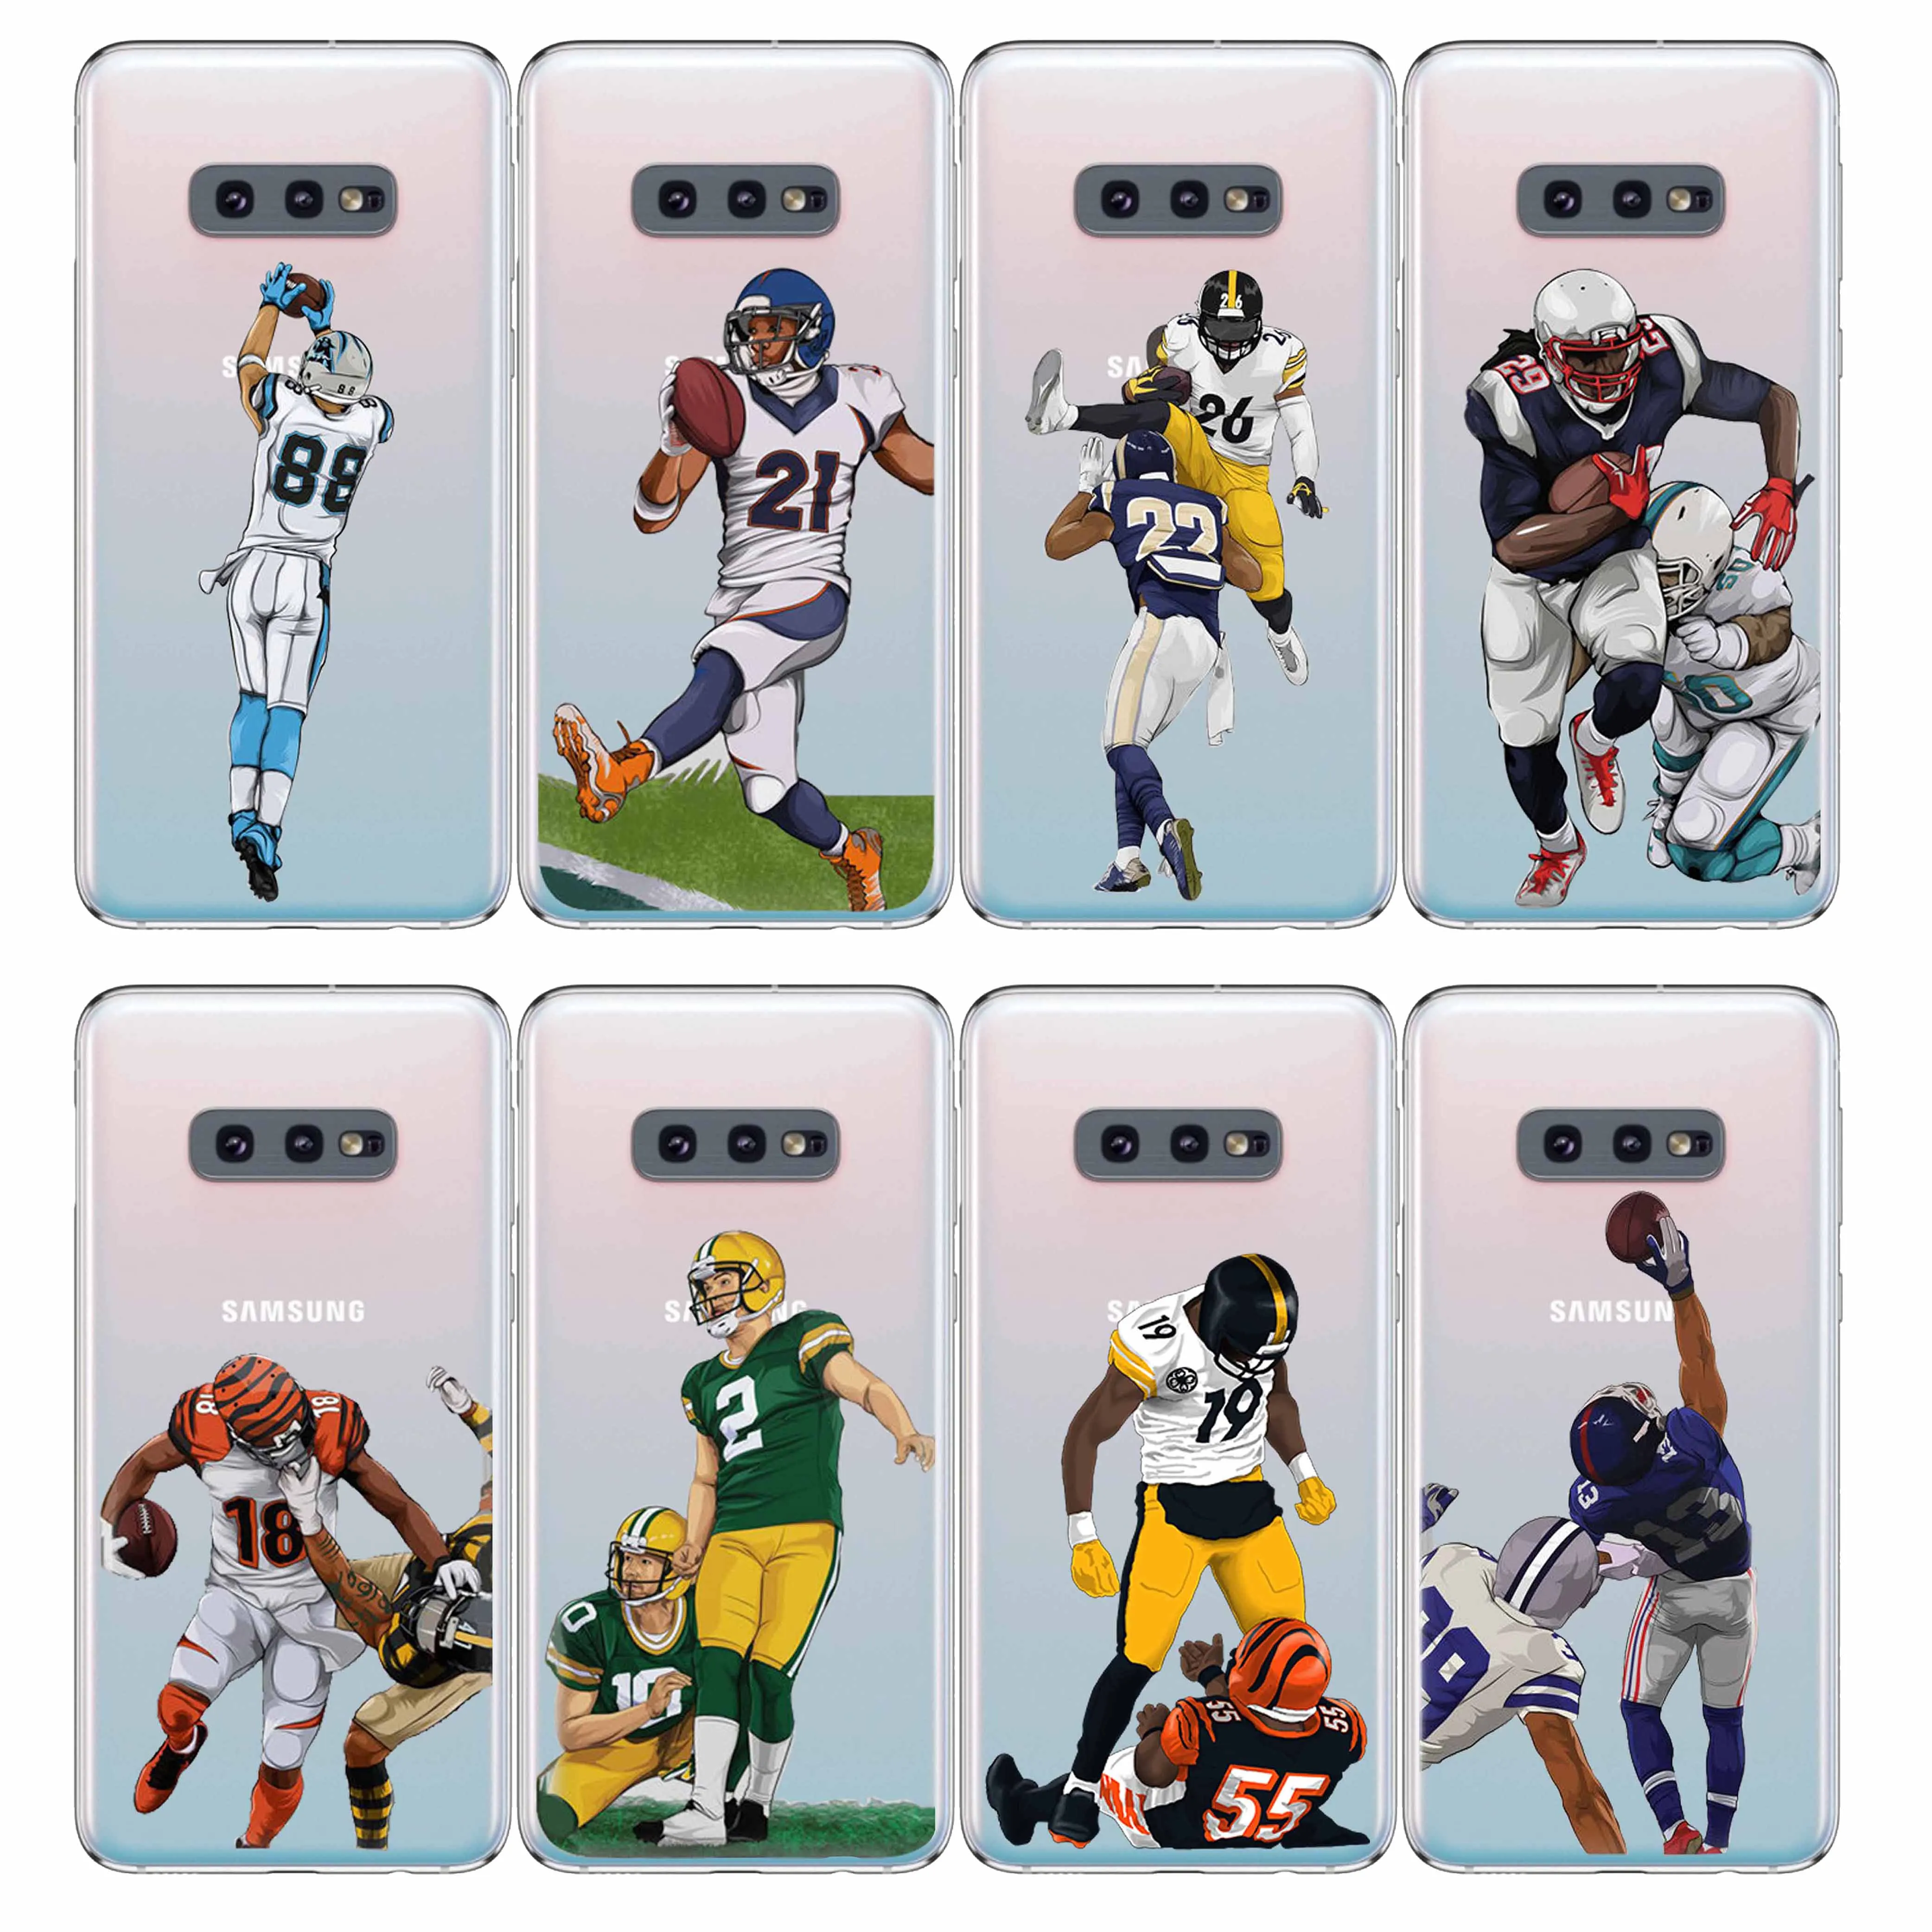 

soft TPU transparent case Case rugby players Cute Cartoon Phone Case for Samsung A71 A51 A50 S20 Note10plus S10e S10plus